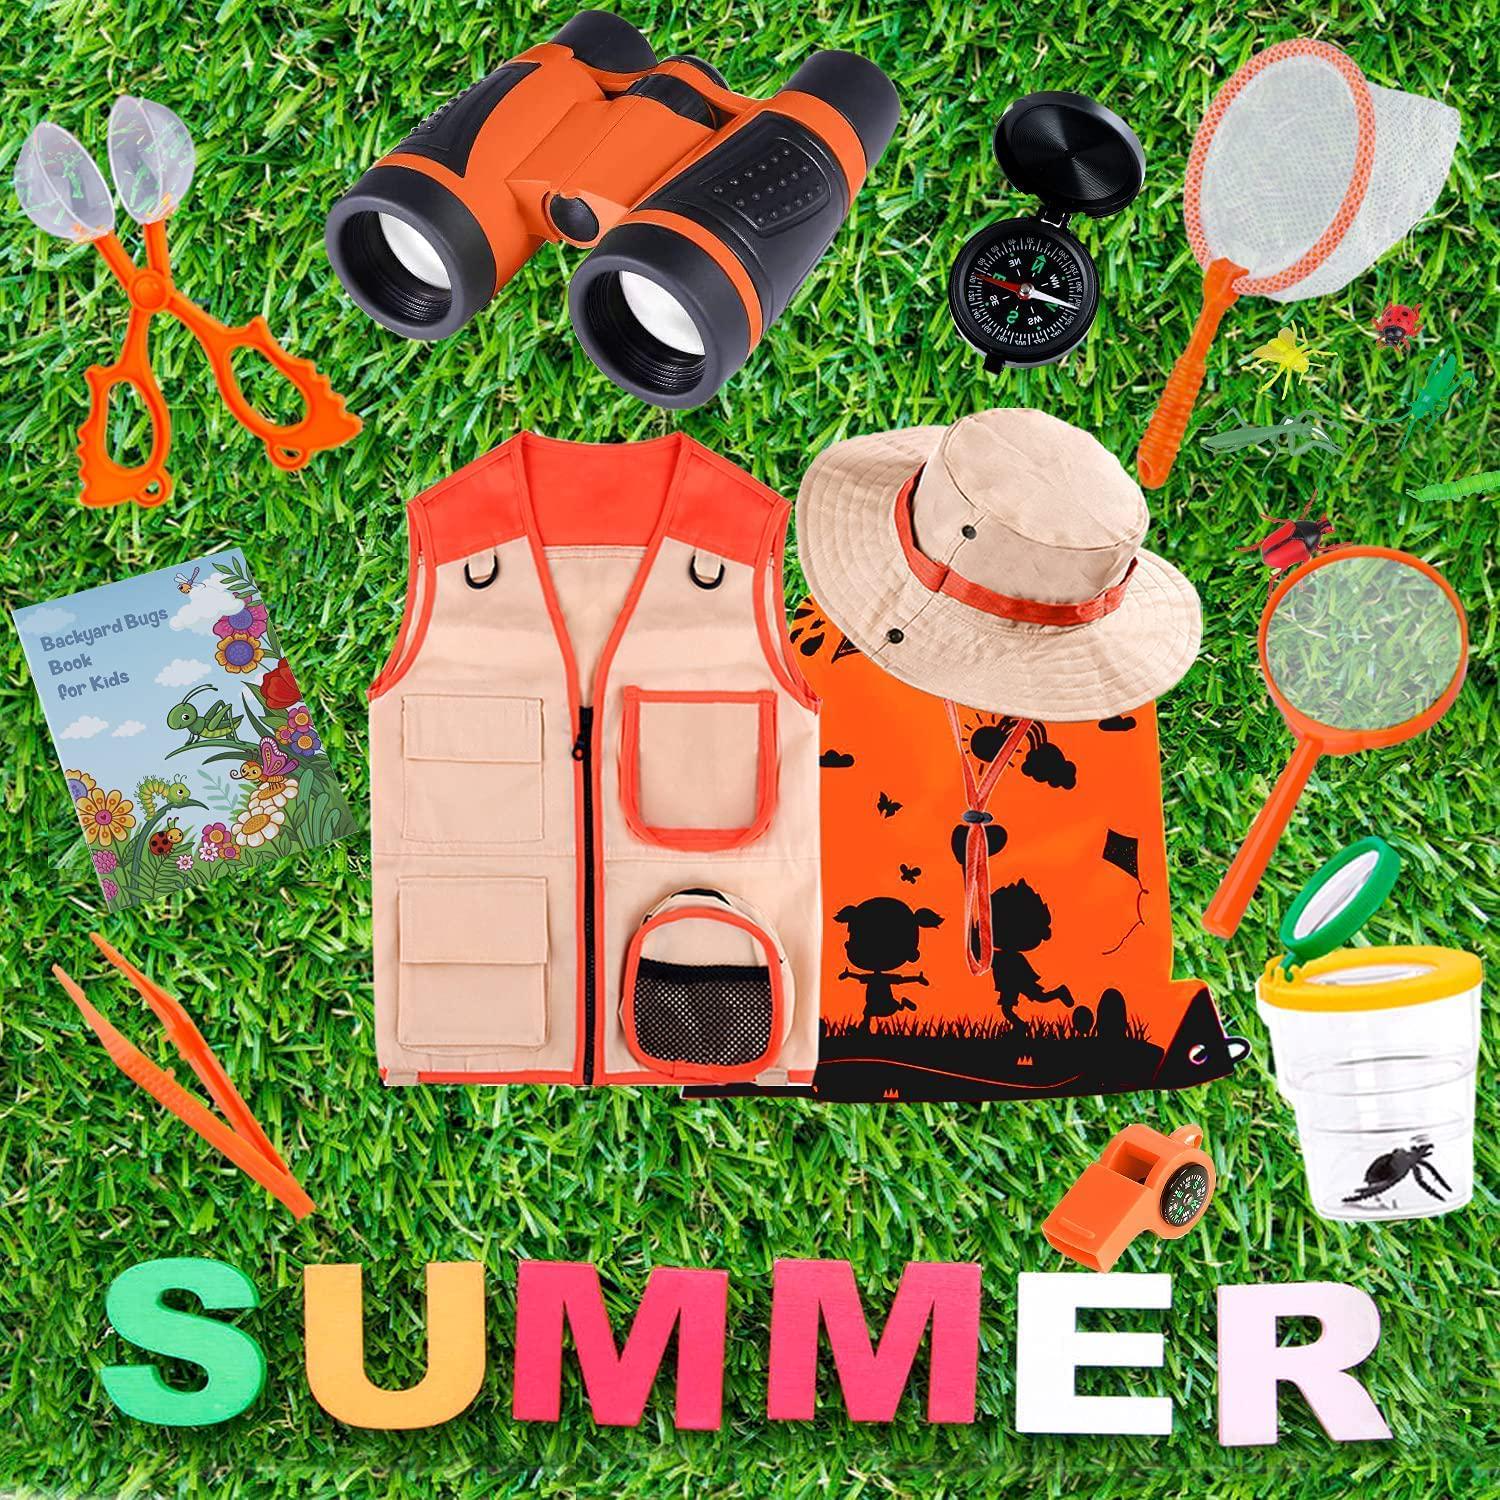 TEPSMIGO, Kids Explorer Kit, 11 Pcs Outdoor Exploration Kit with Binoculars, Costume Vest, Safari Hat, Bag, Hand-Crank Flashlight, Magnifying Glass and Whistle, Camping, Educational Toy Gift for Boys and Girls